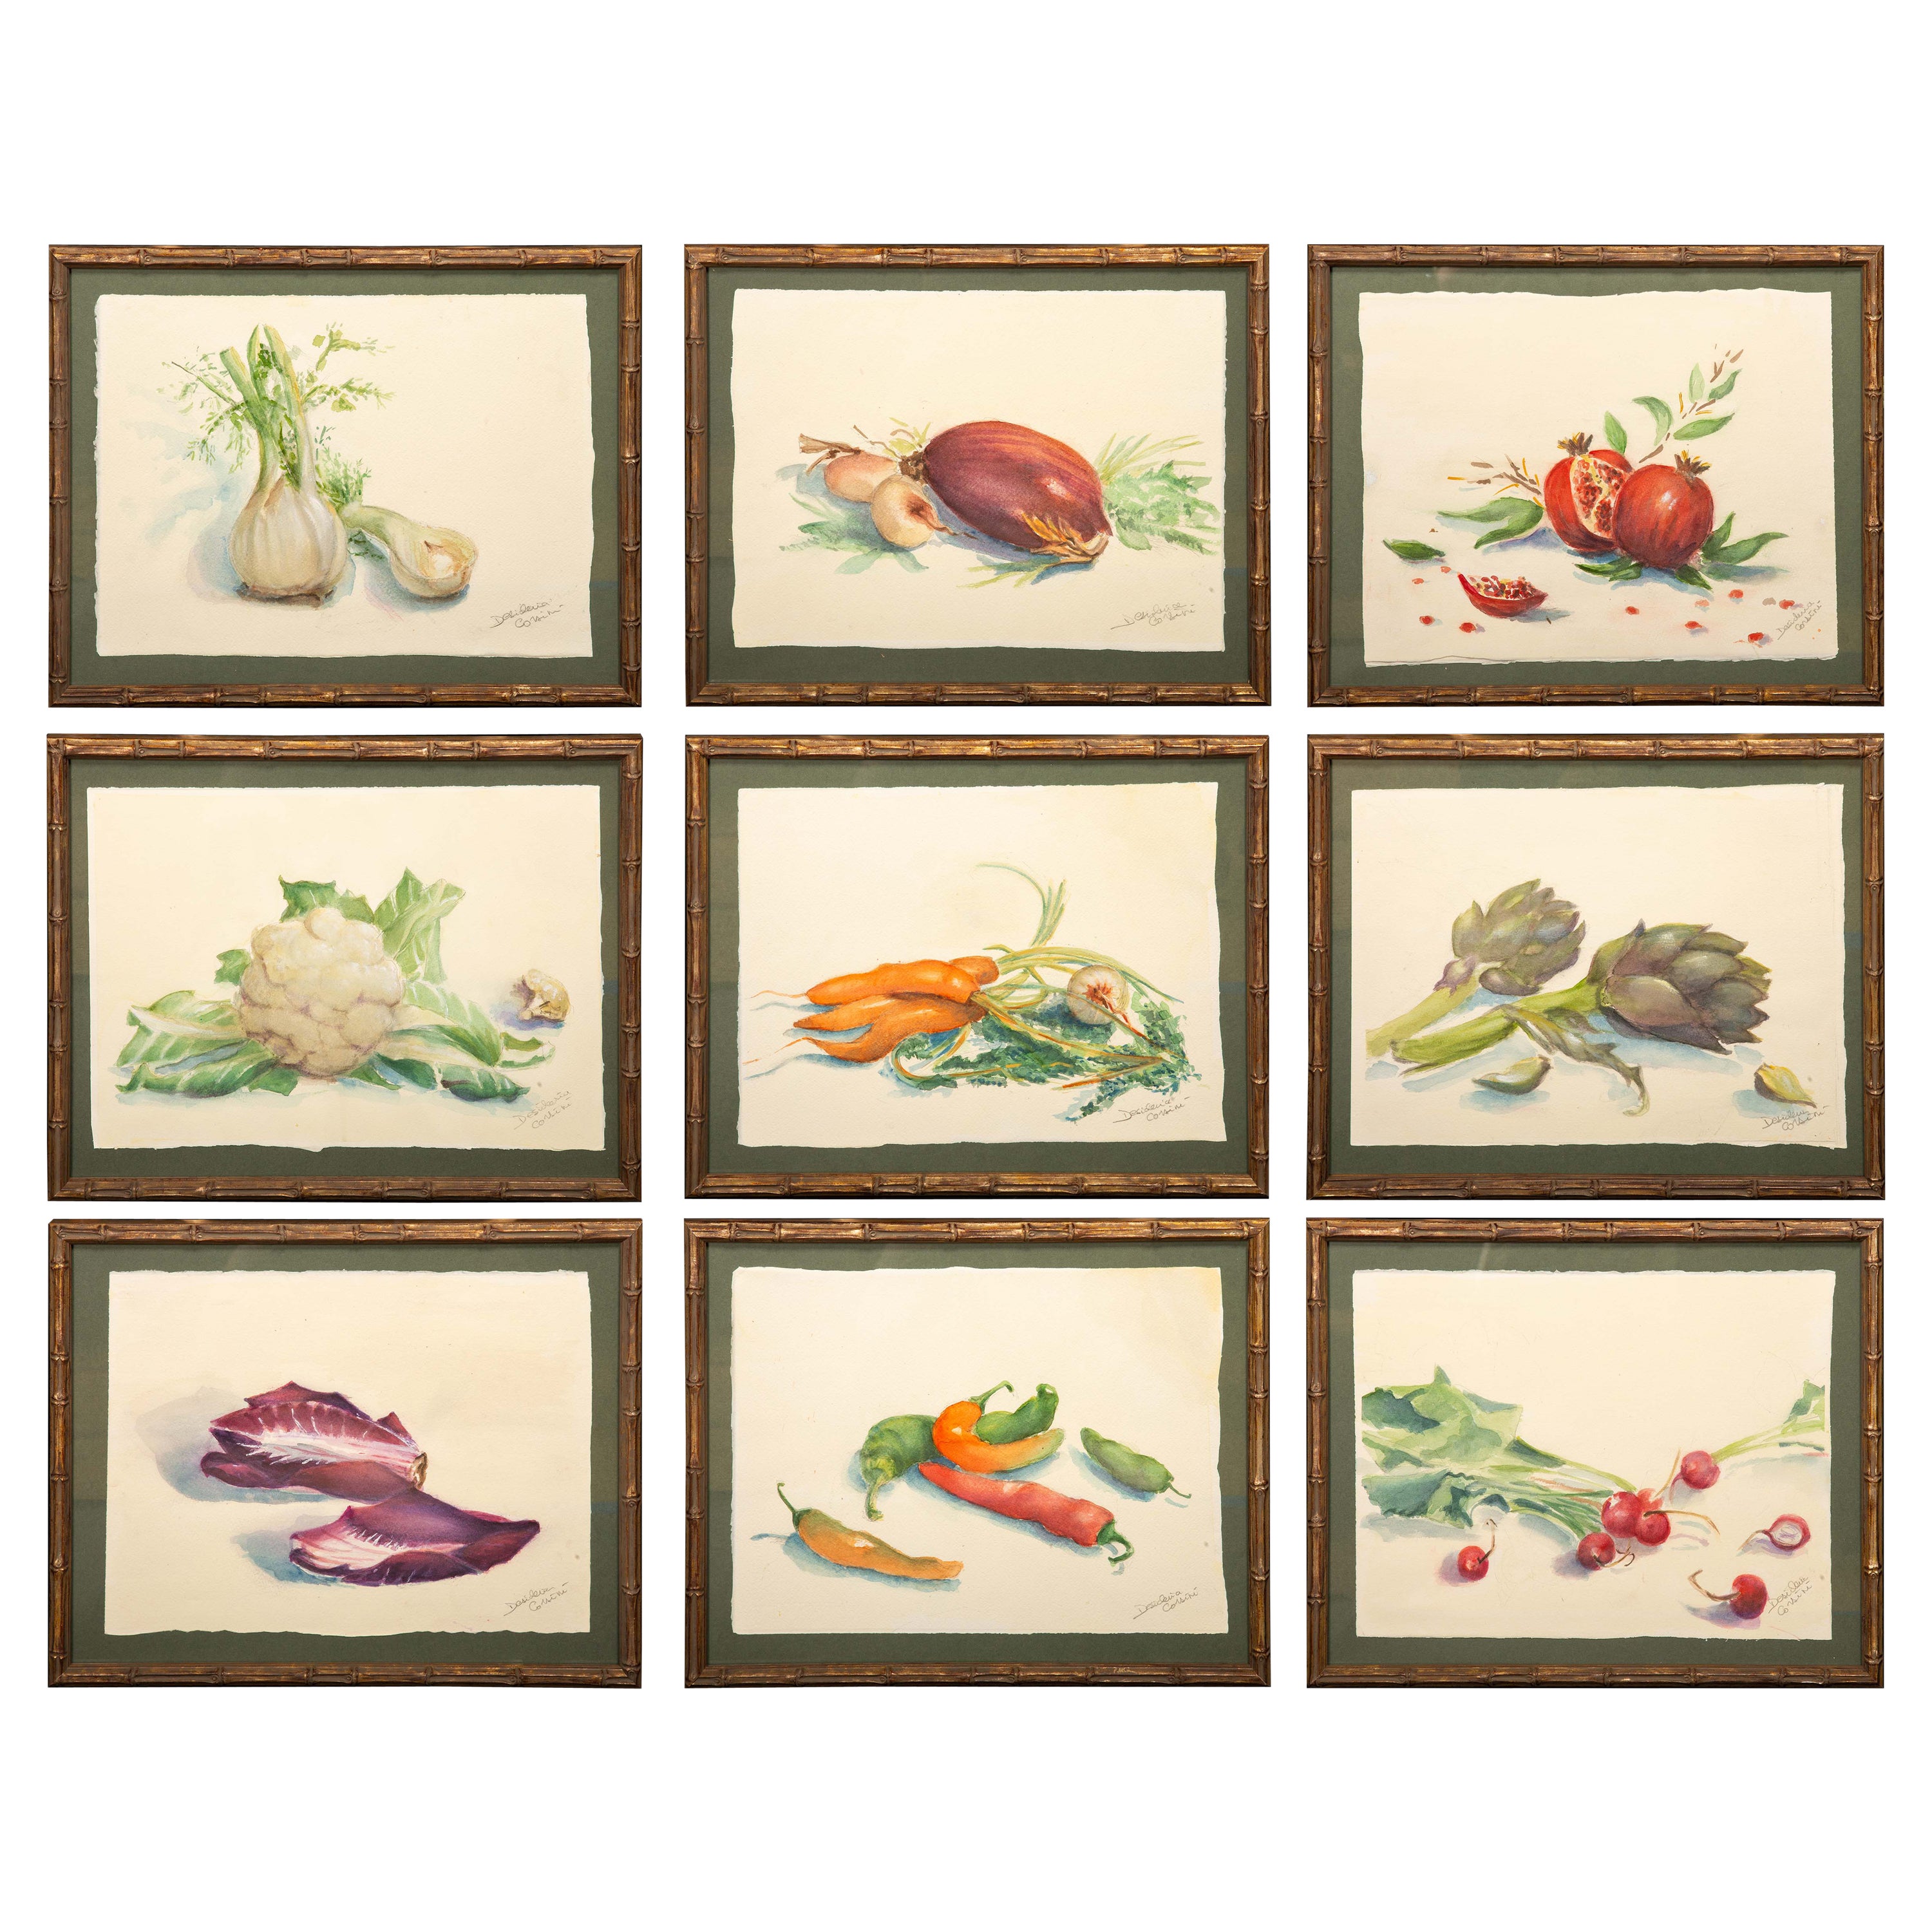 Obst- und Gemüse-Aquarell-Kollektion von Desideria Corsini